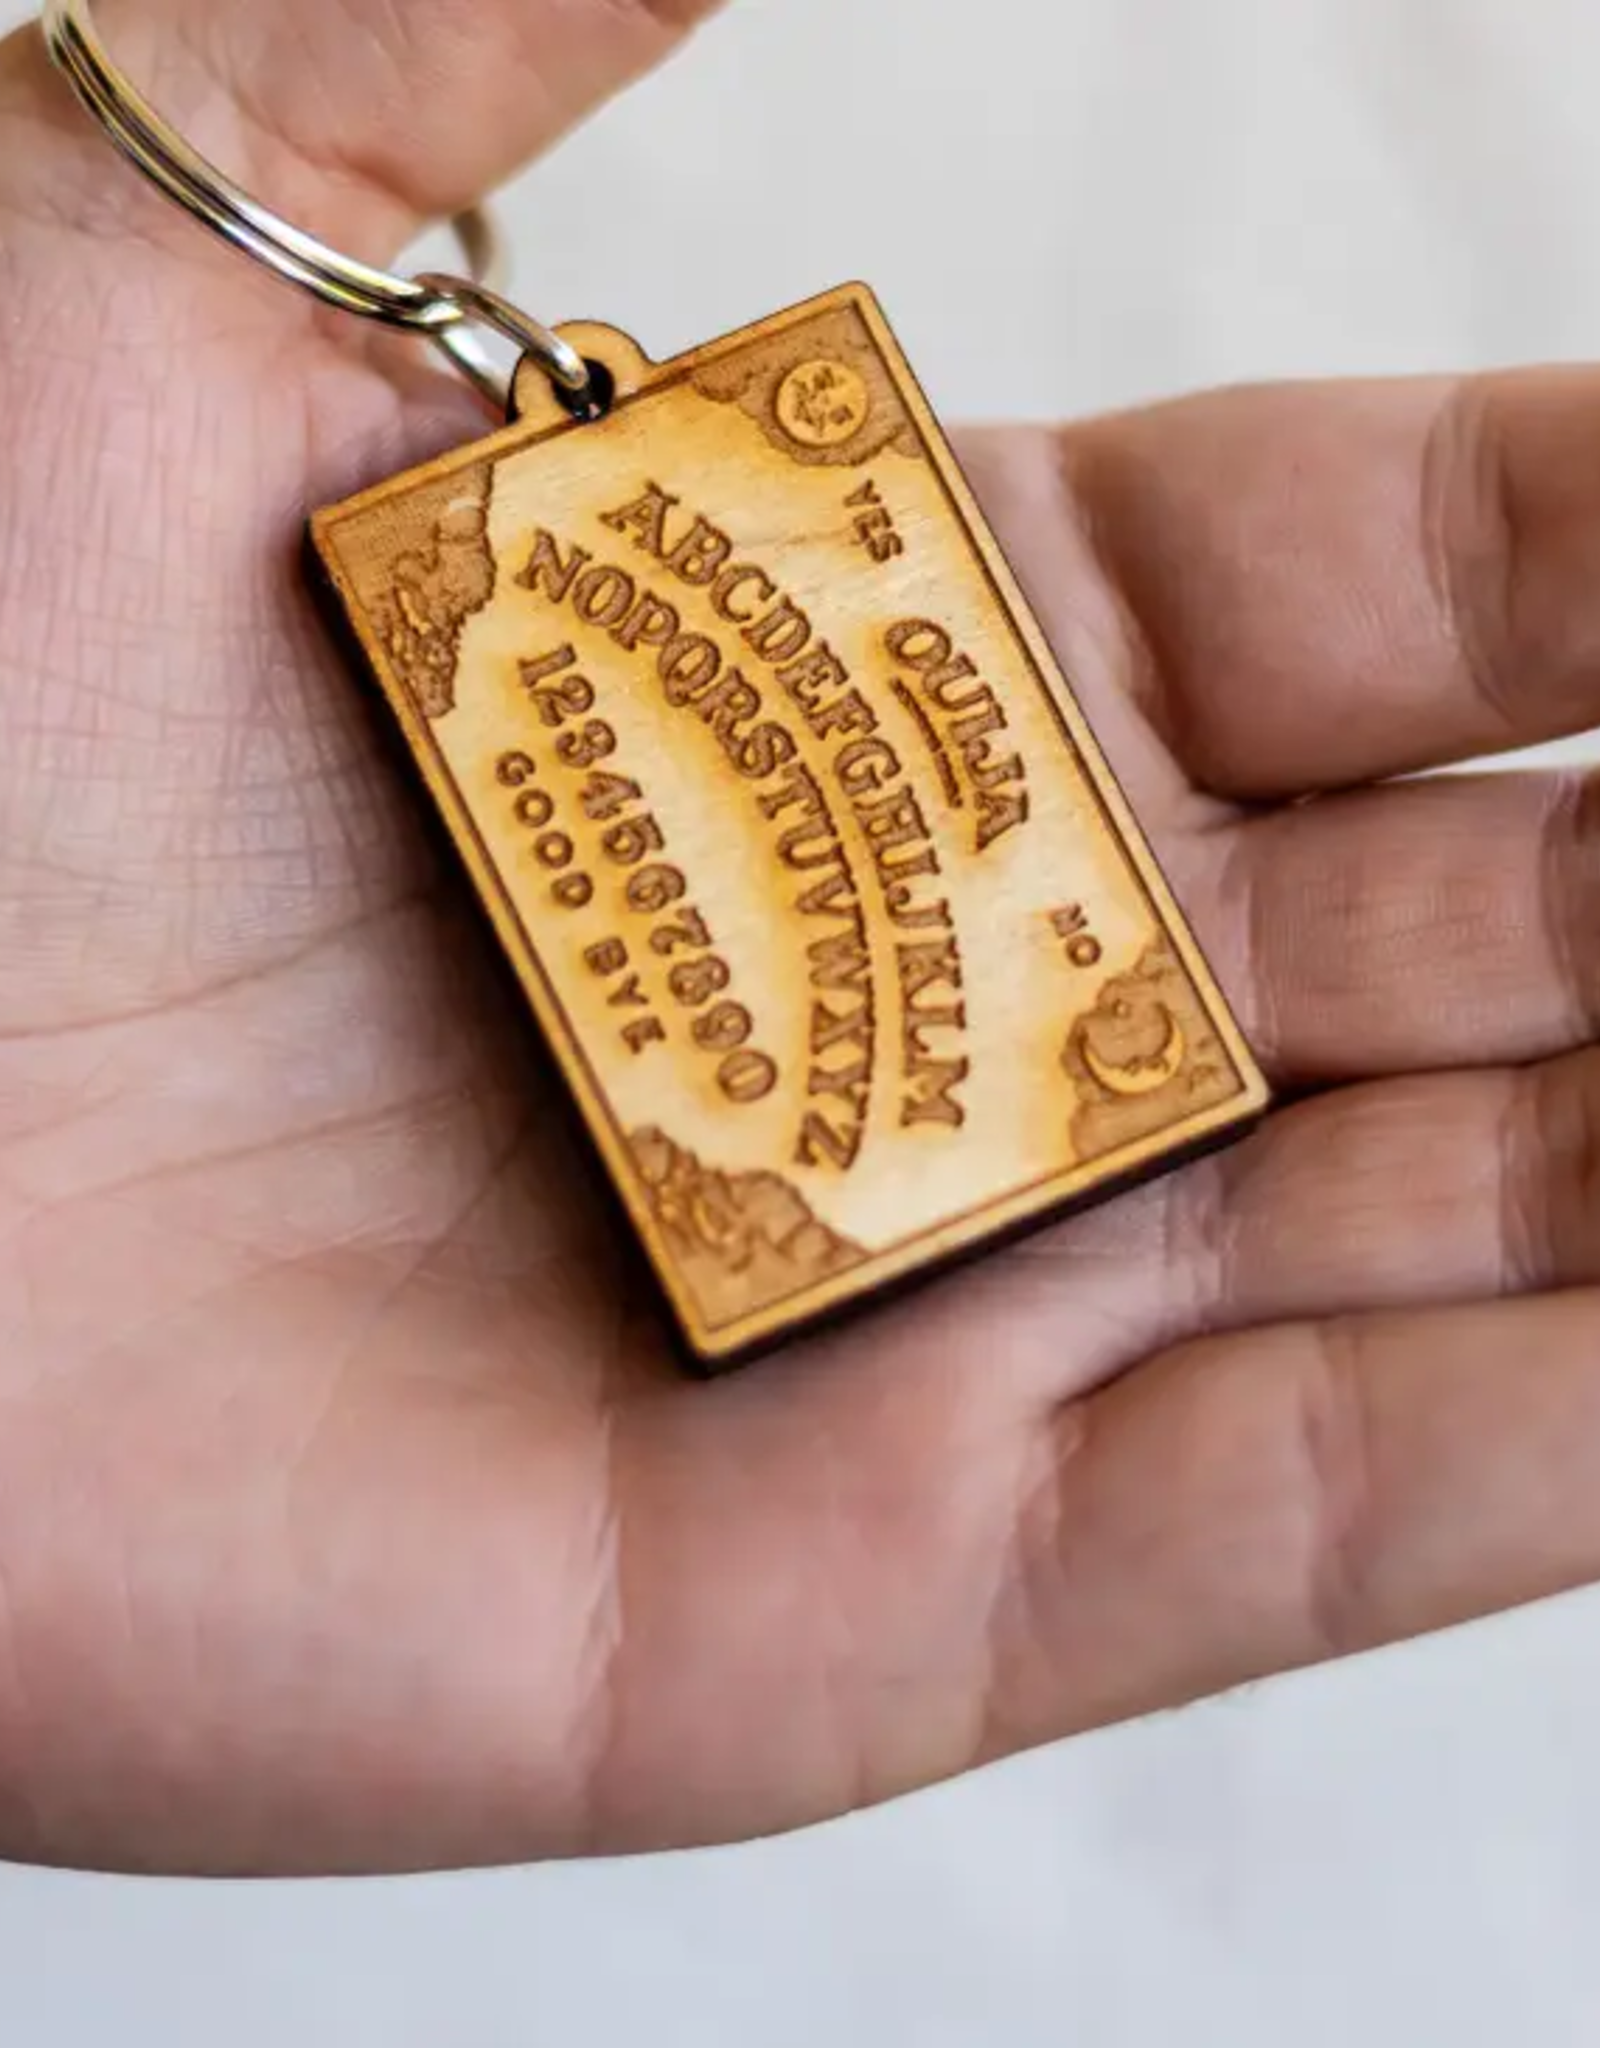 Most Amazing Ouija Board Wooden Keychain